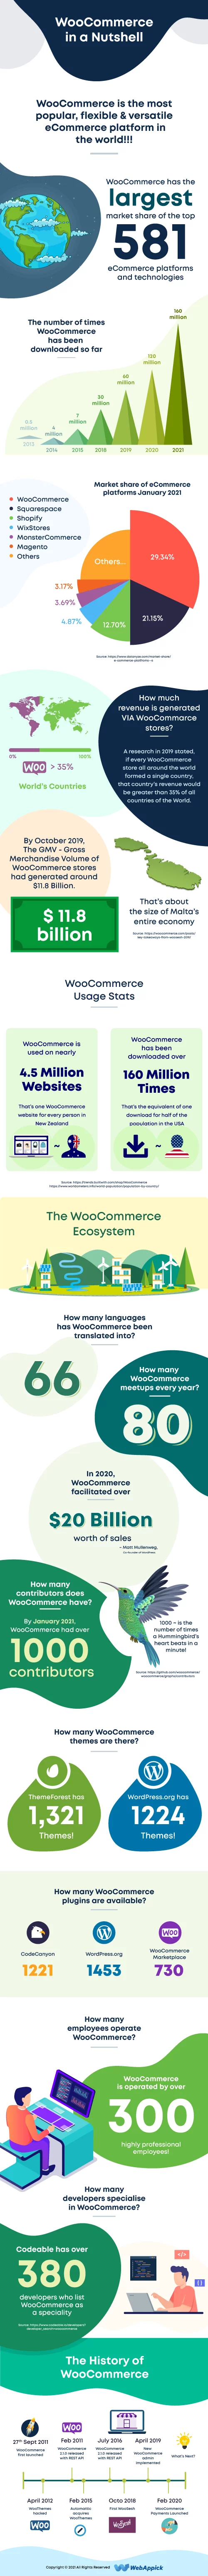 WooCommerce Revenue Infographic - WooCommerce Revenue